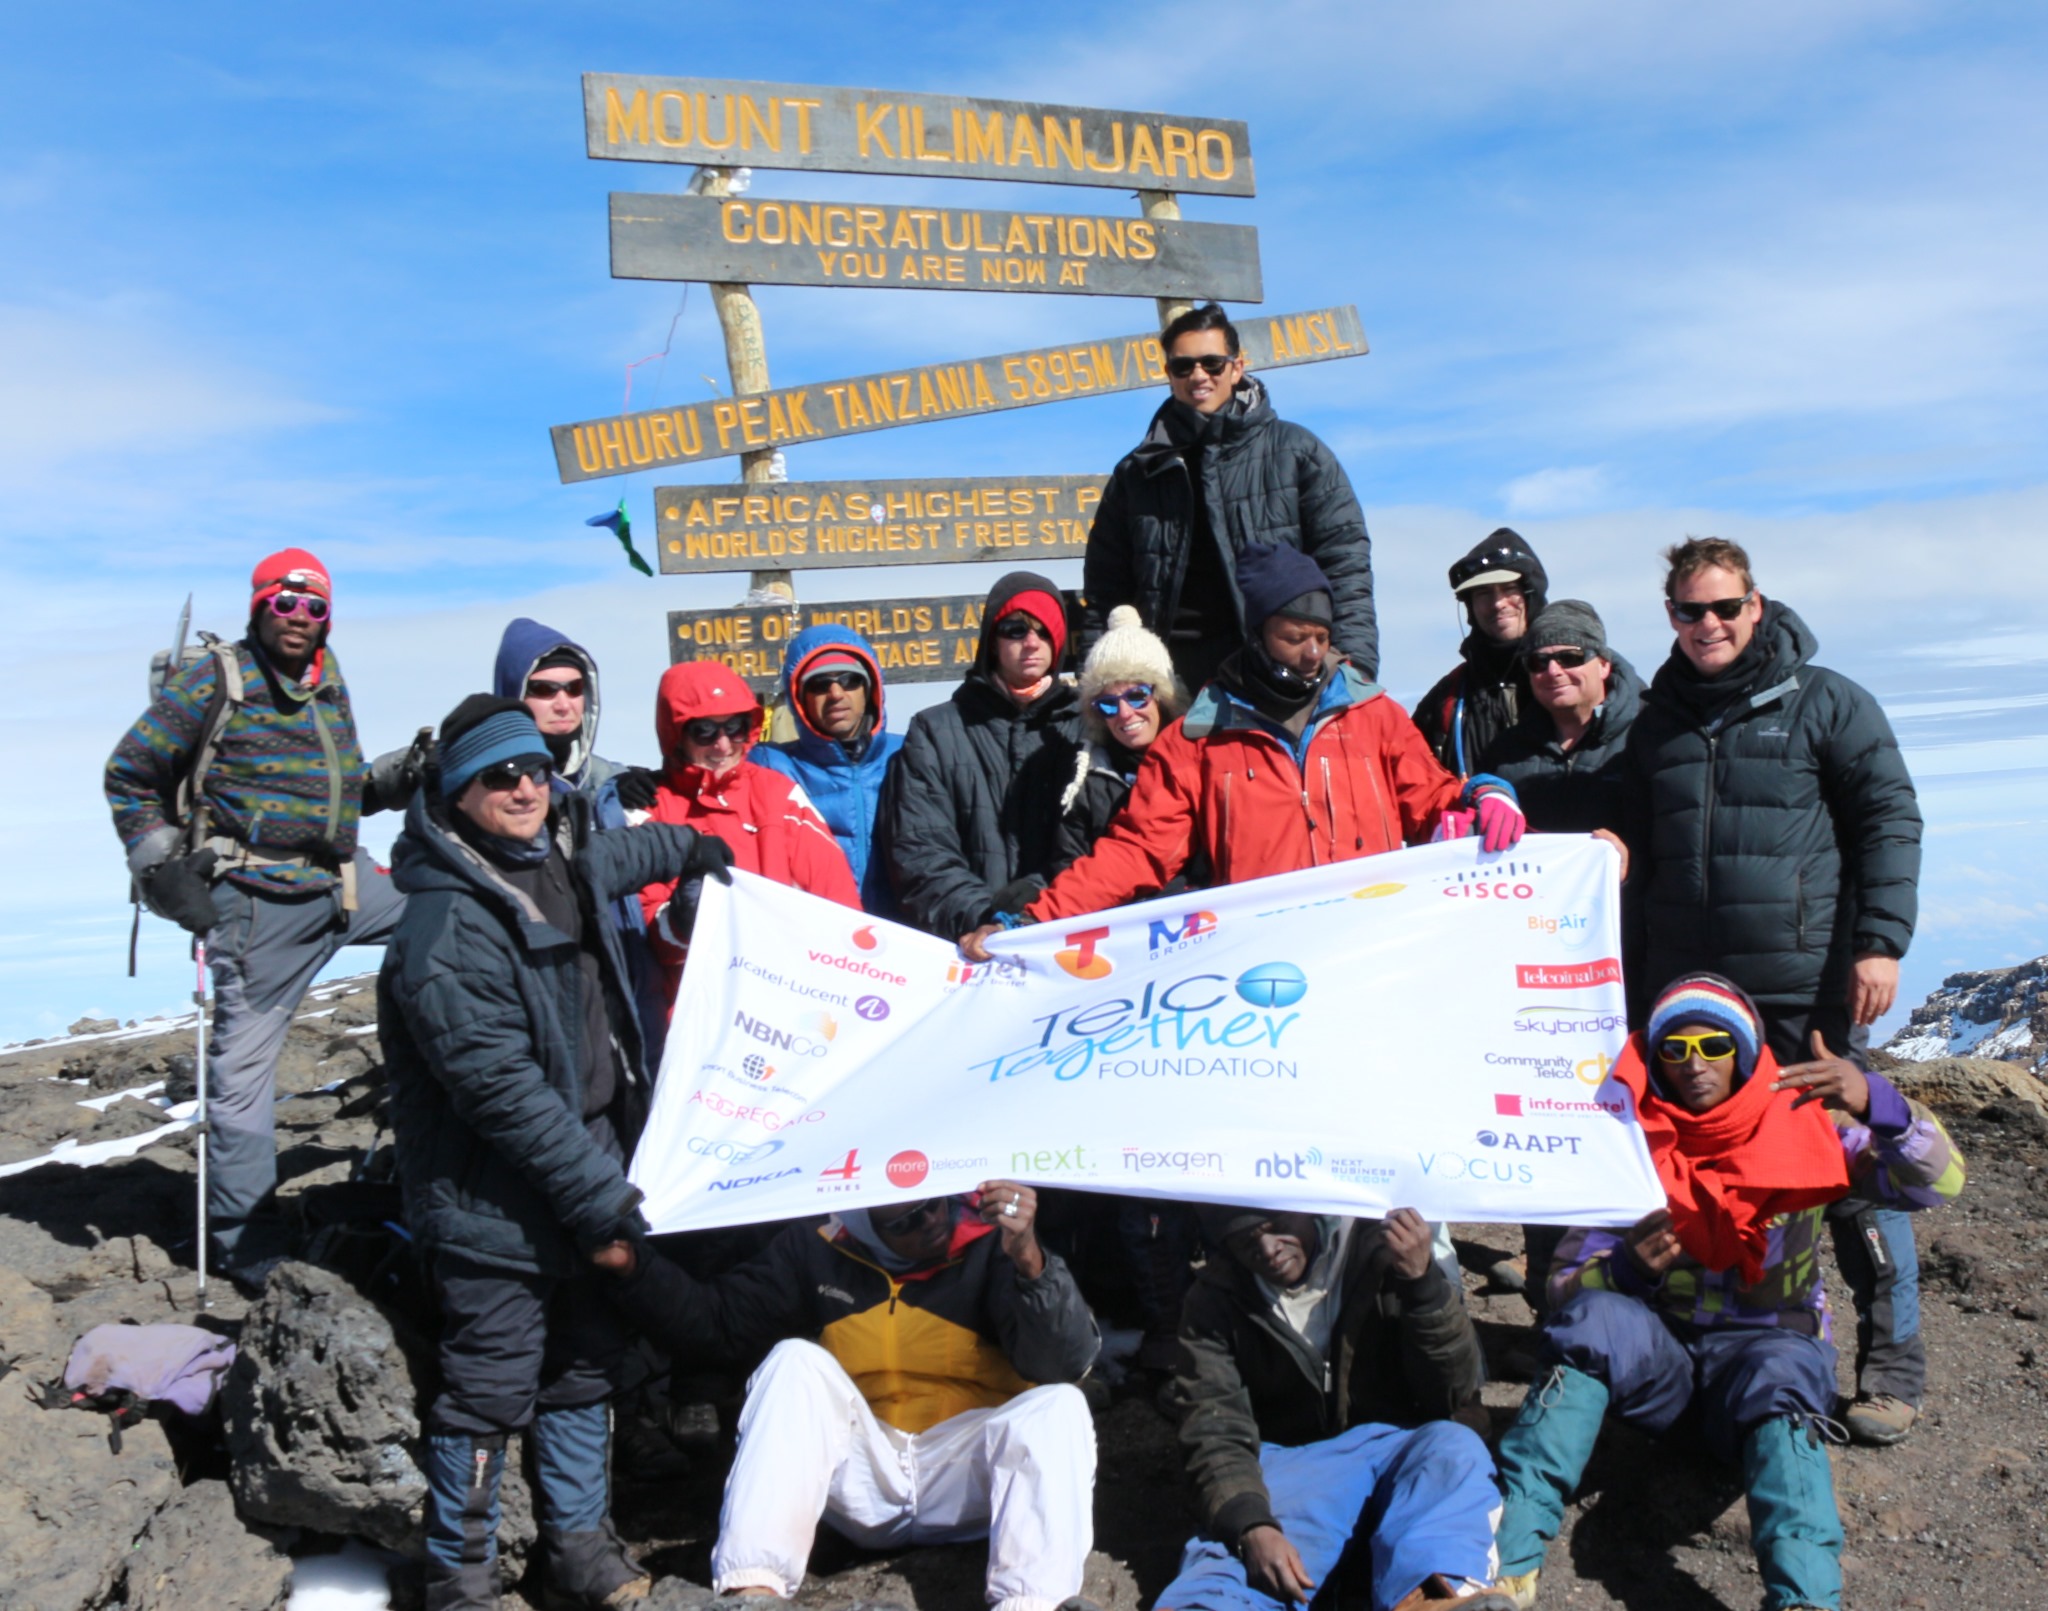 Kilimanjaro Climb 2015